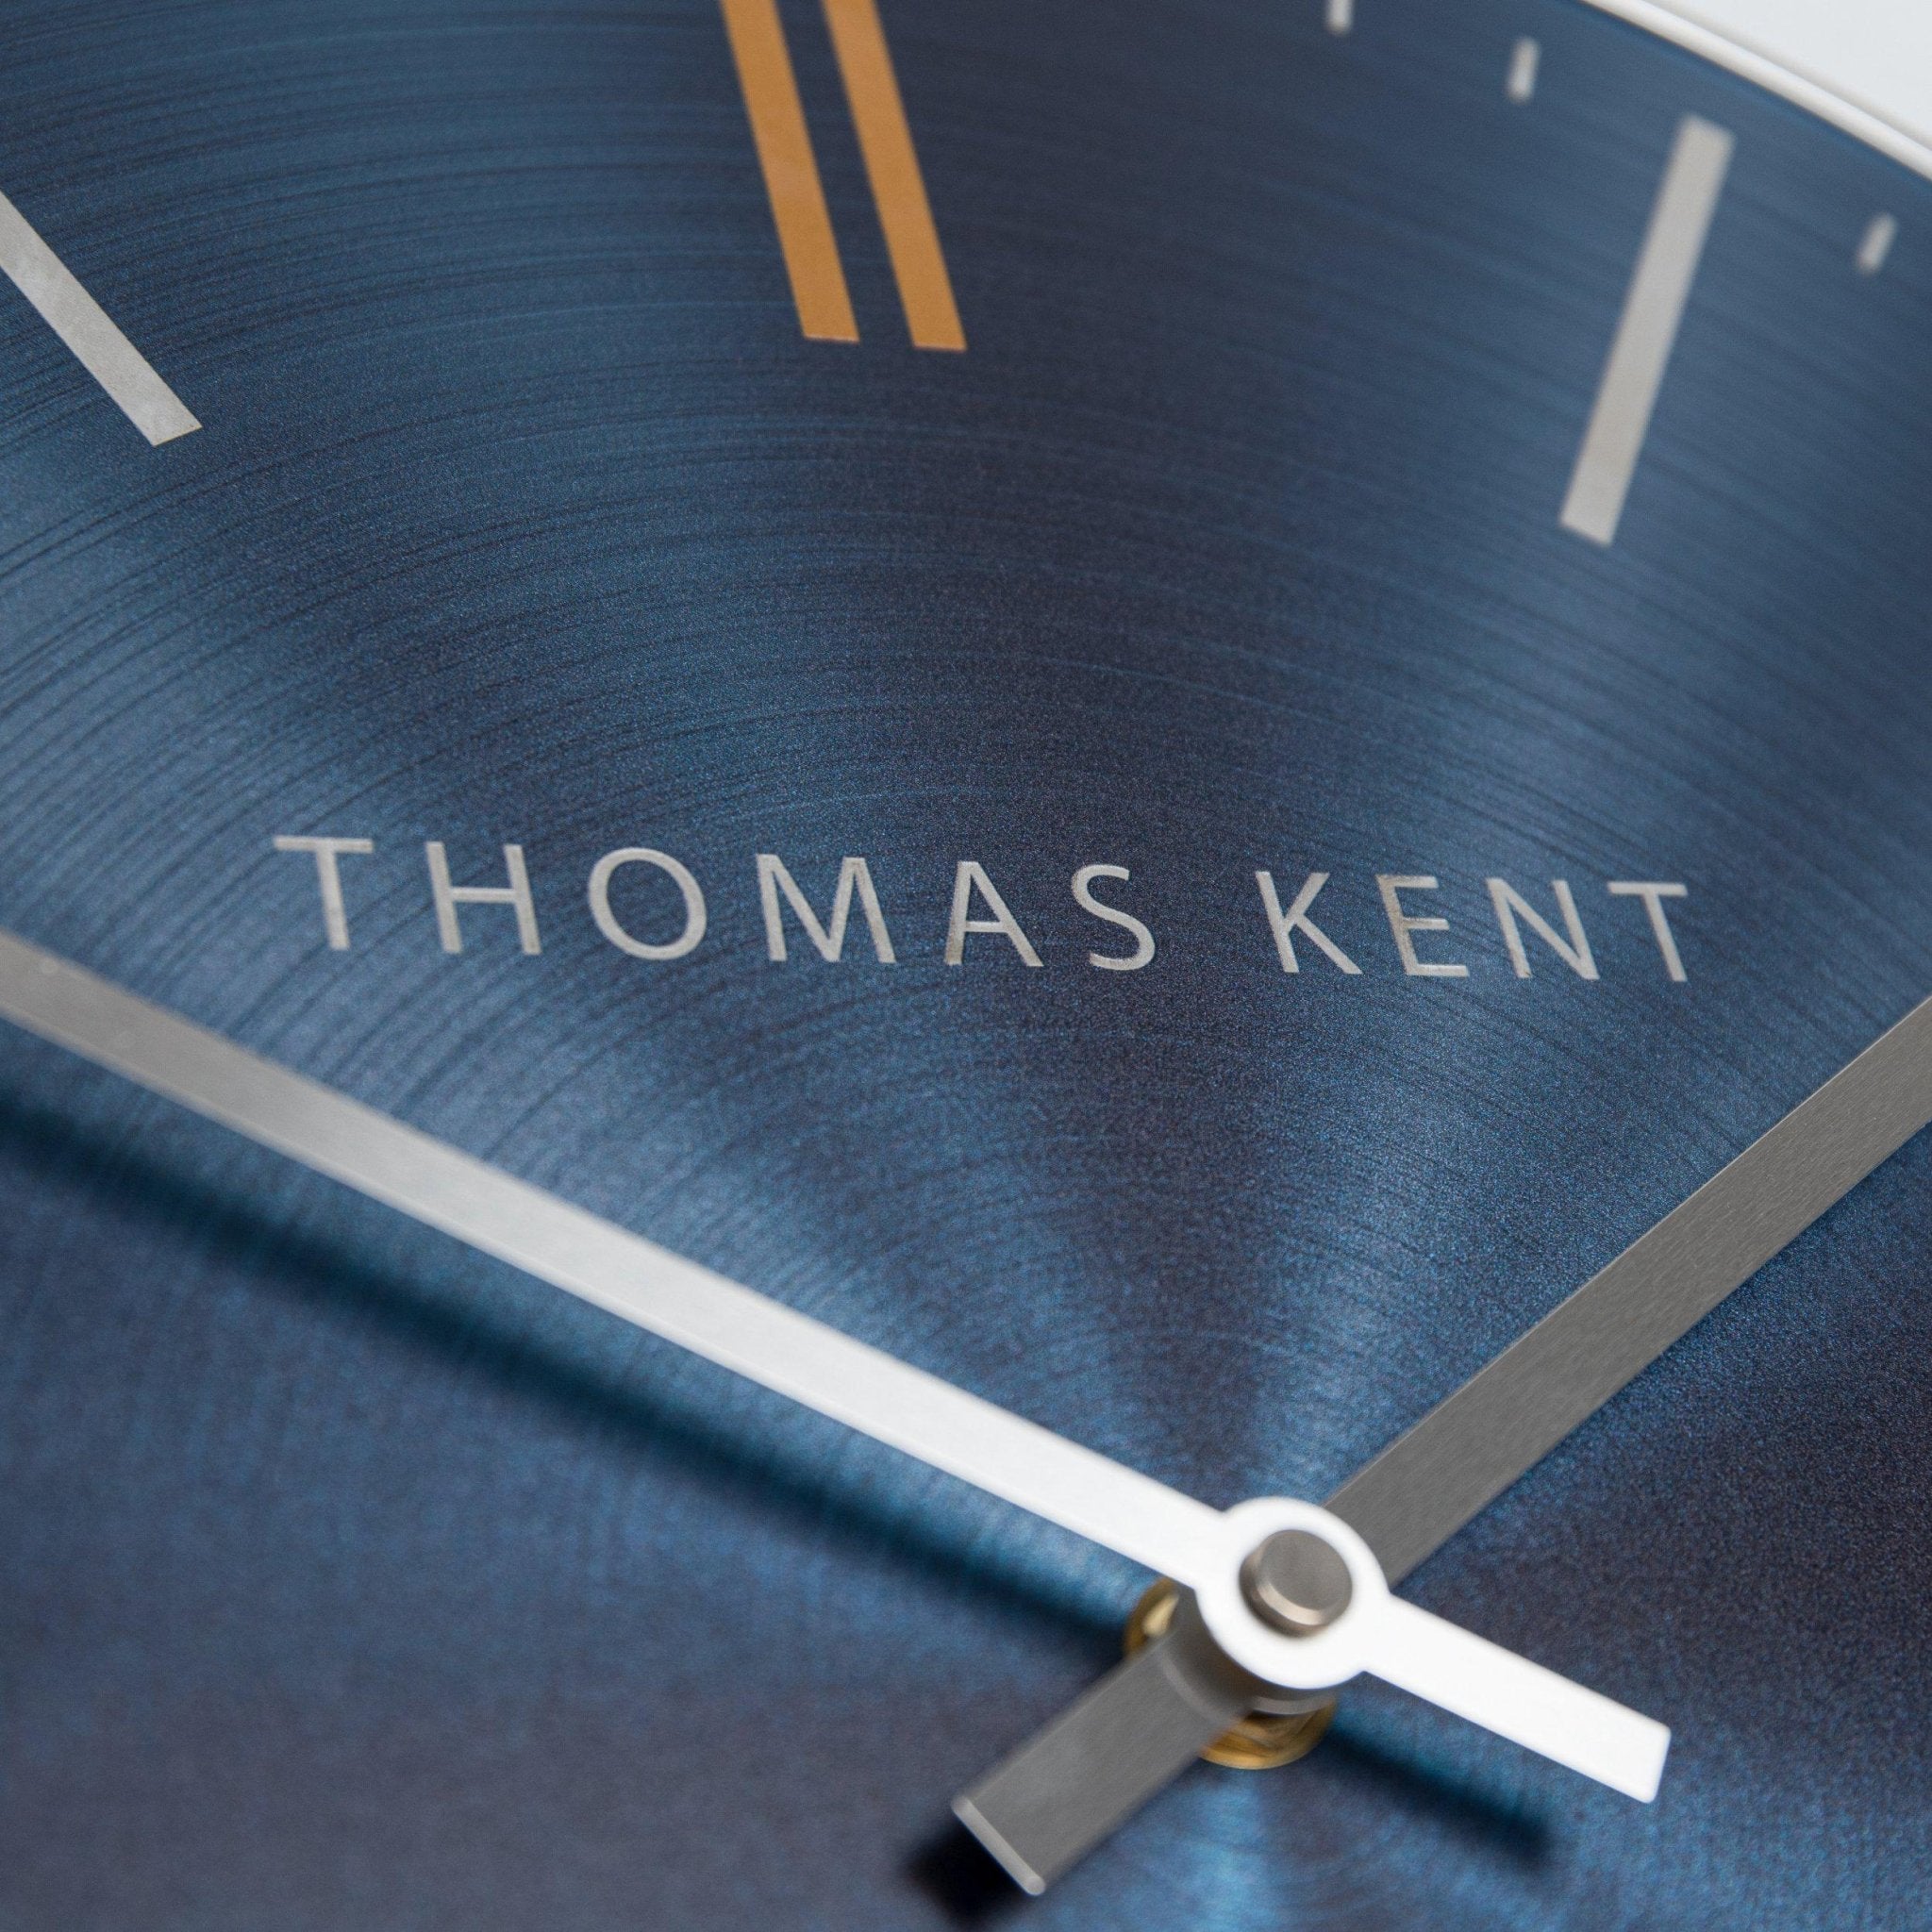 Thomas Kent Bistro Wall Clock - Sapphire 35cm - Duck Barn Interiors